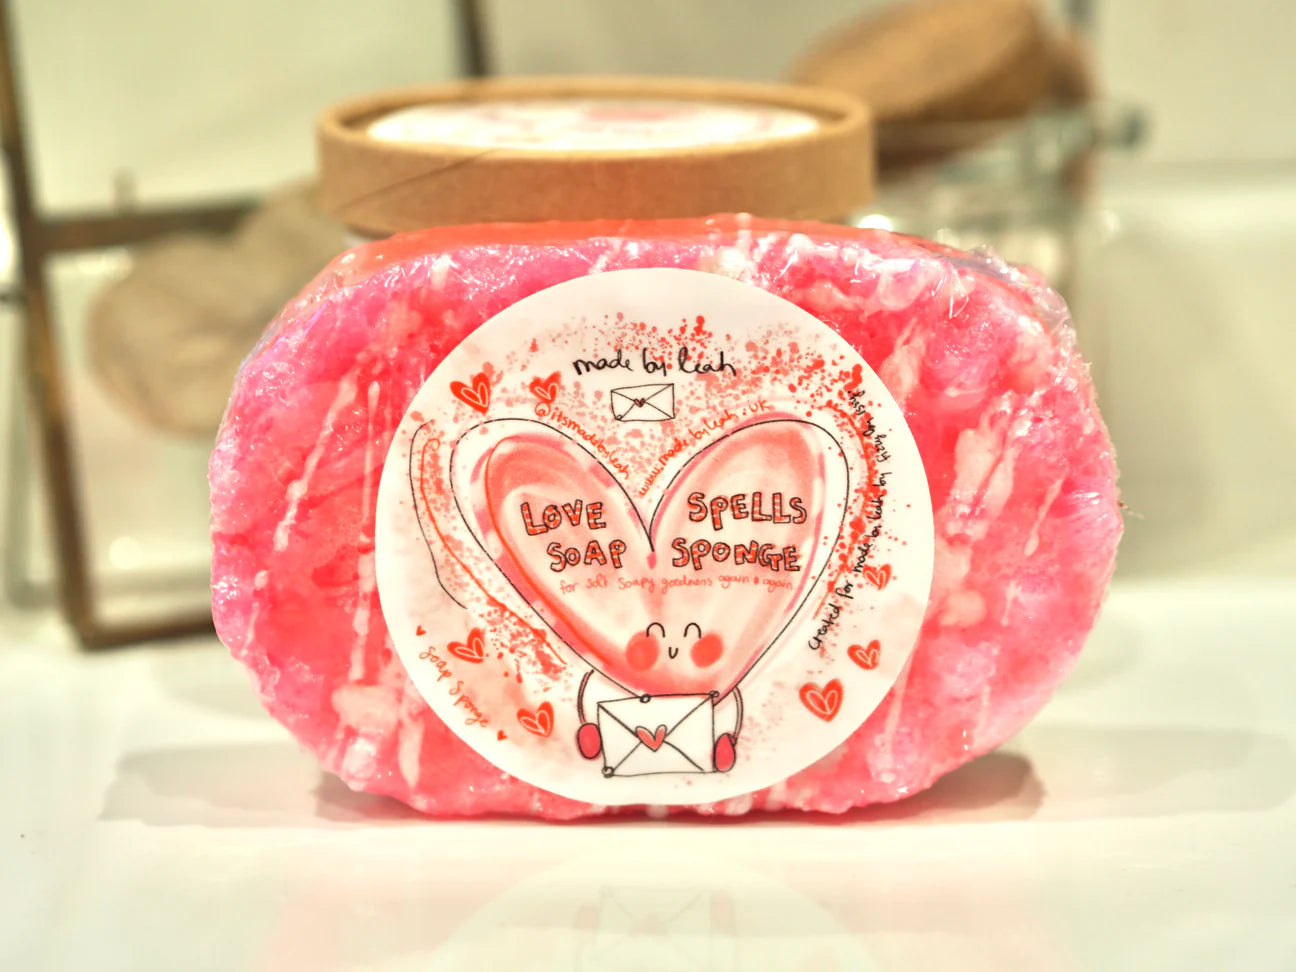 Love spells scented soap sponge